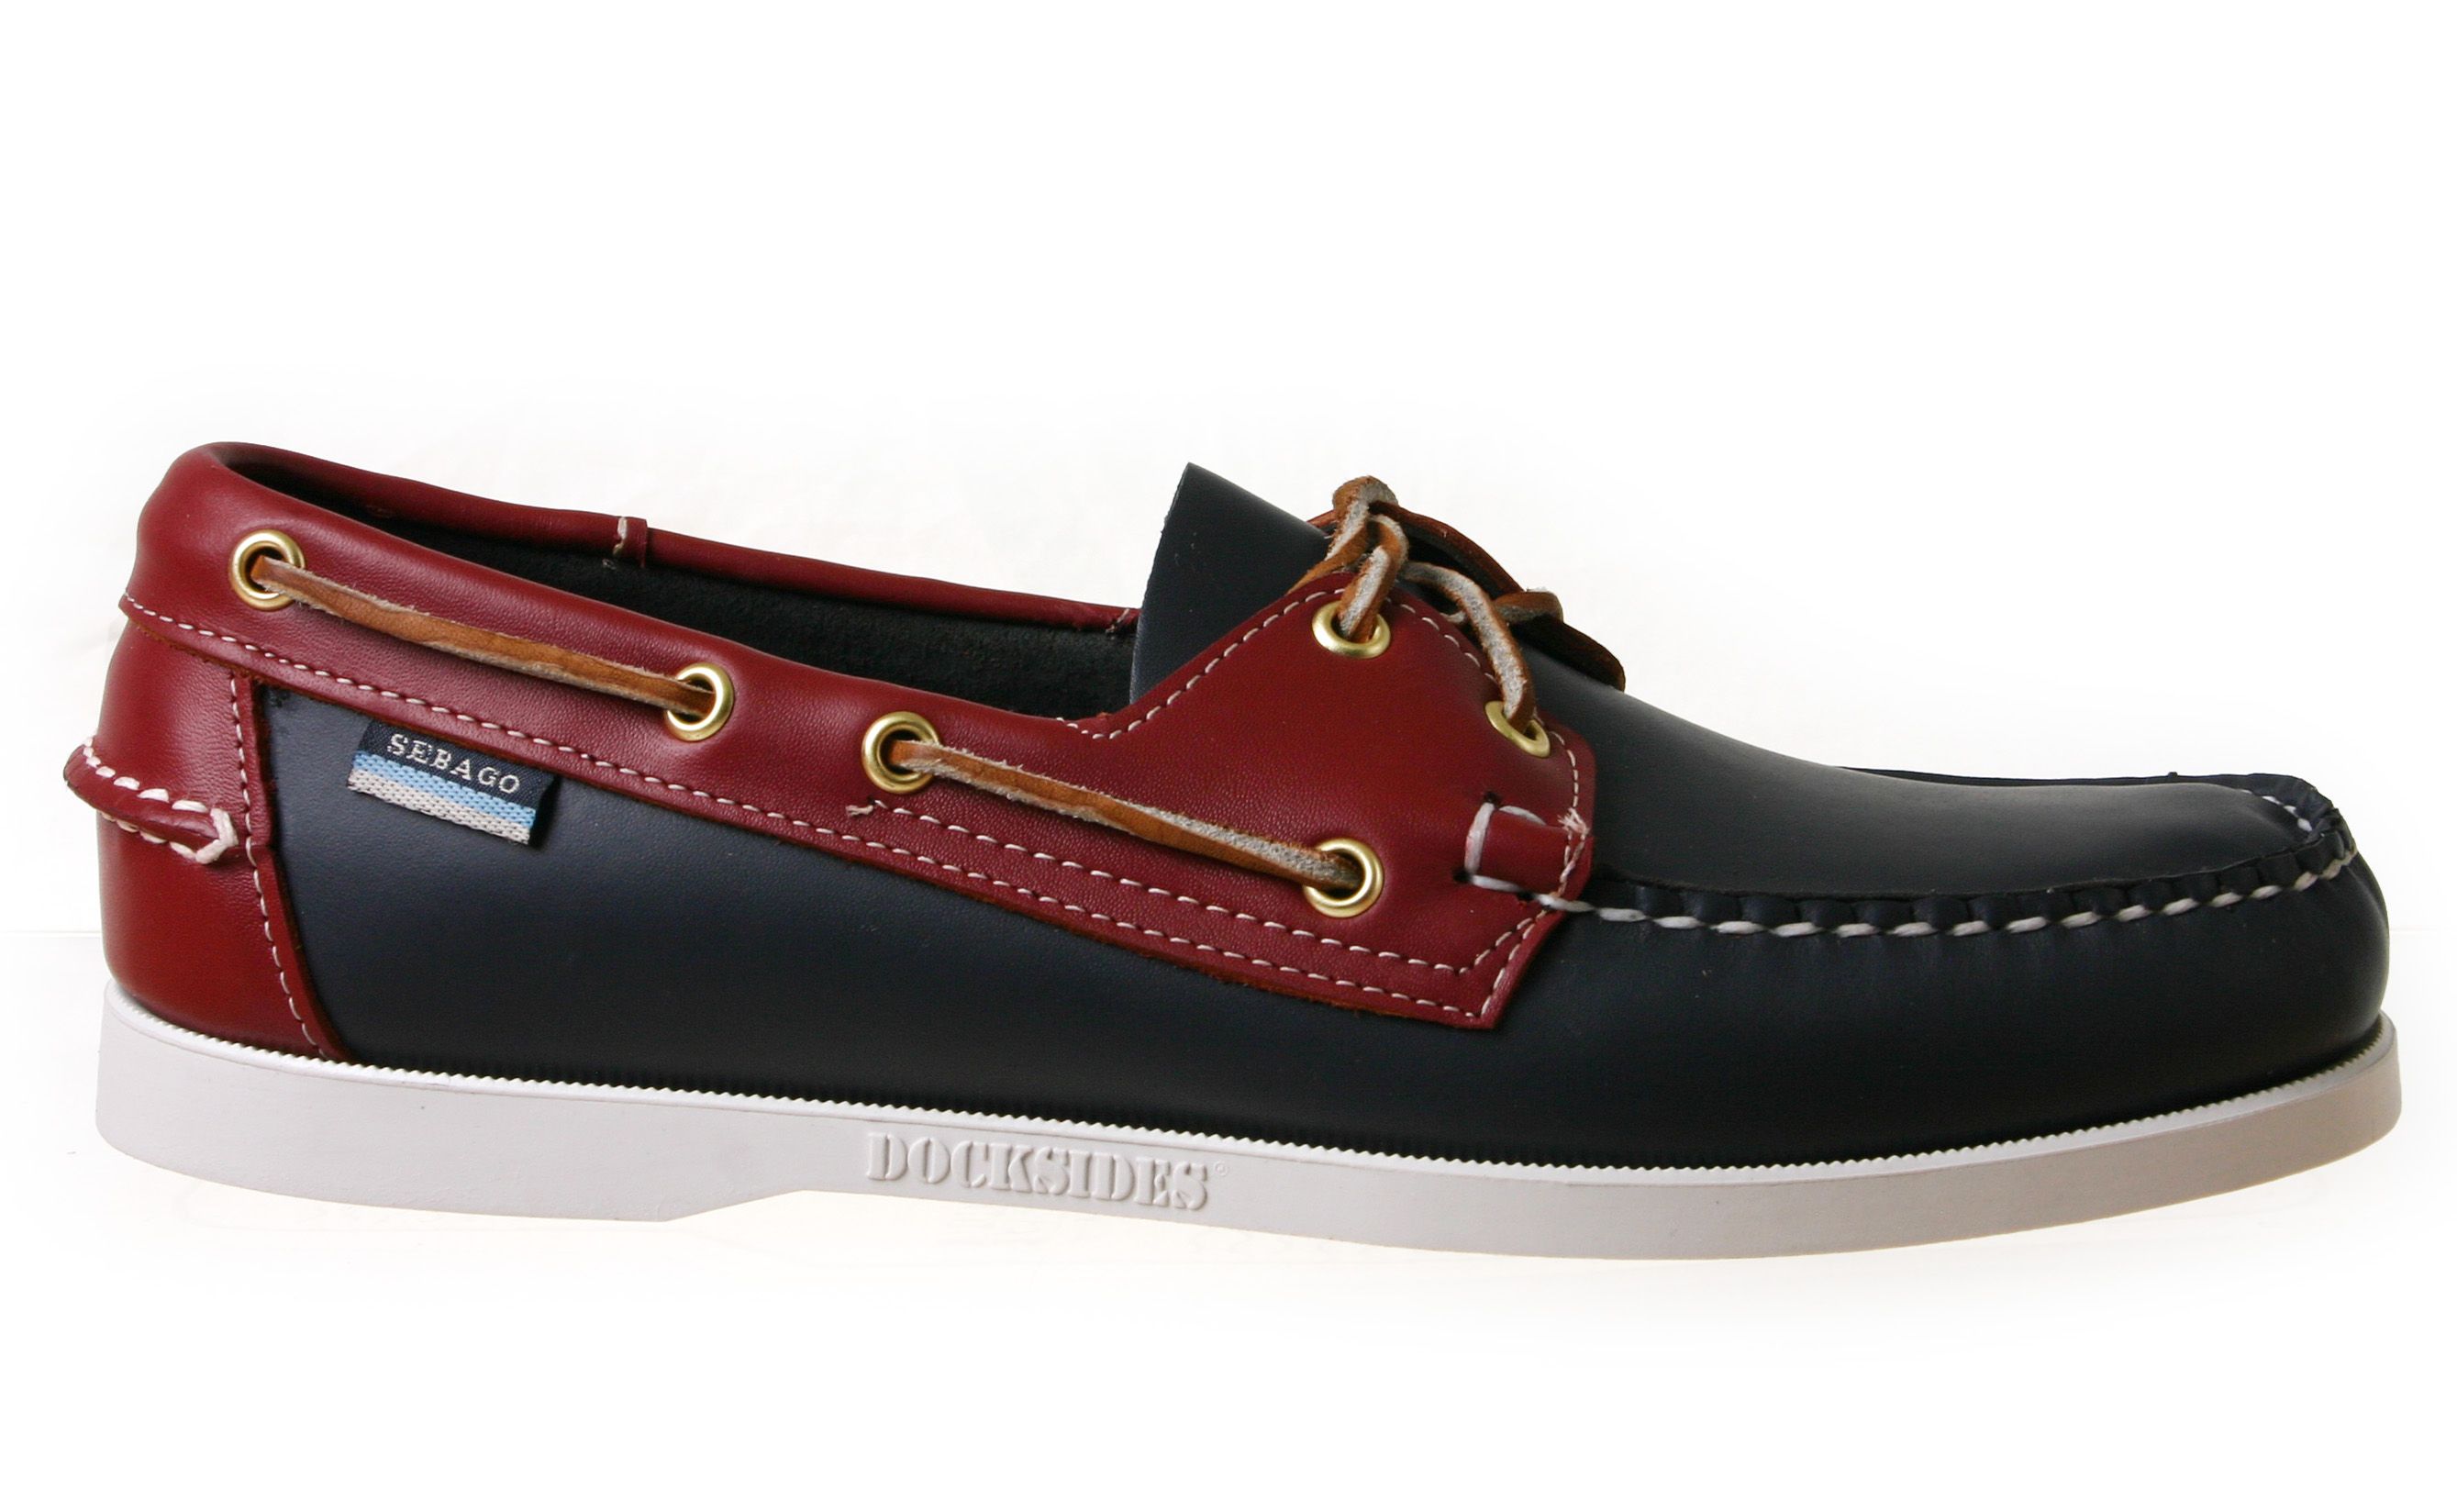 Sebago Mens Boat Shoe B72816 Spinnaker Navy Red Leather